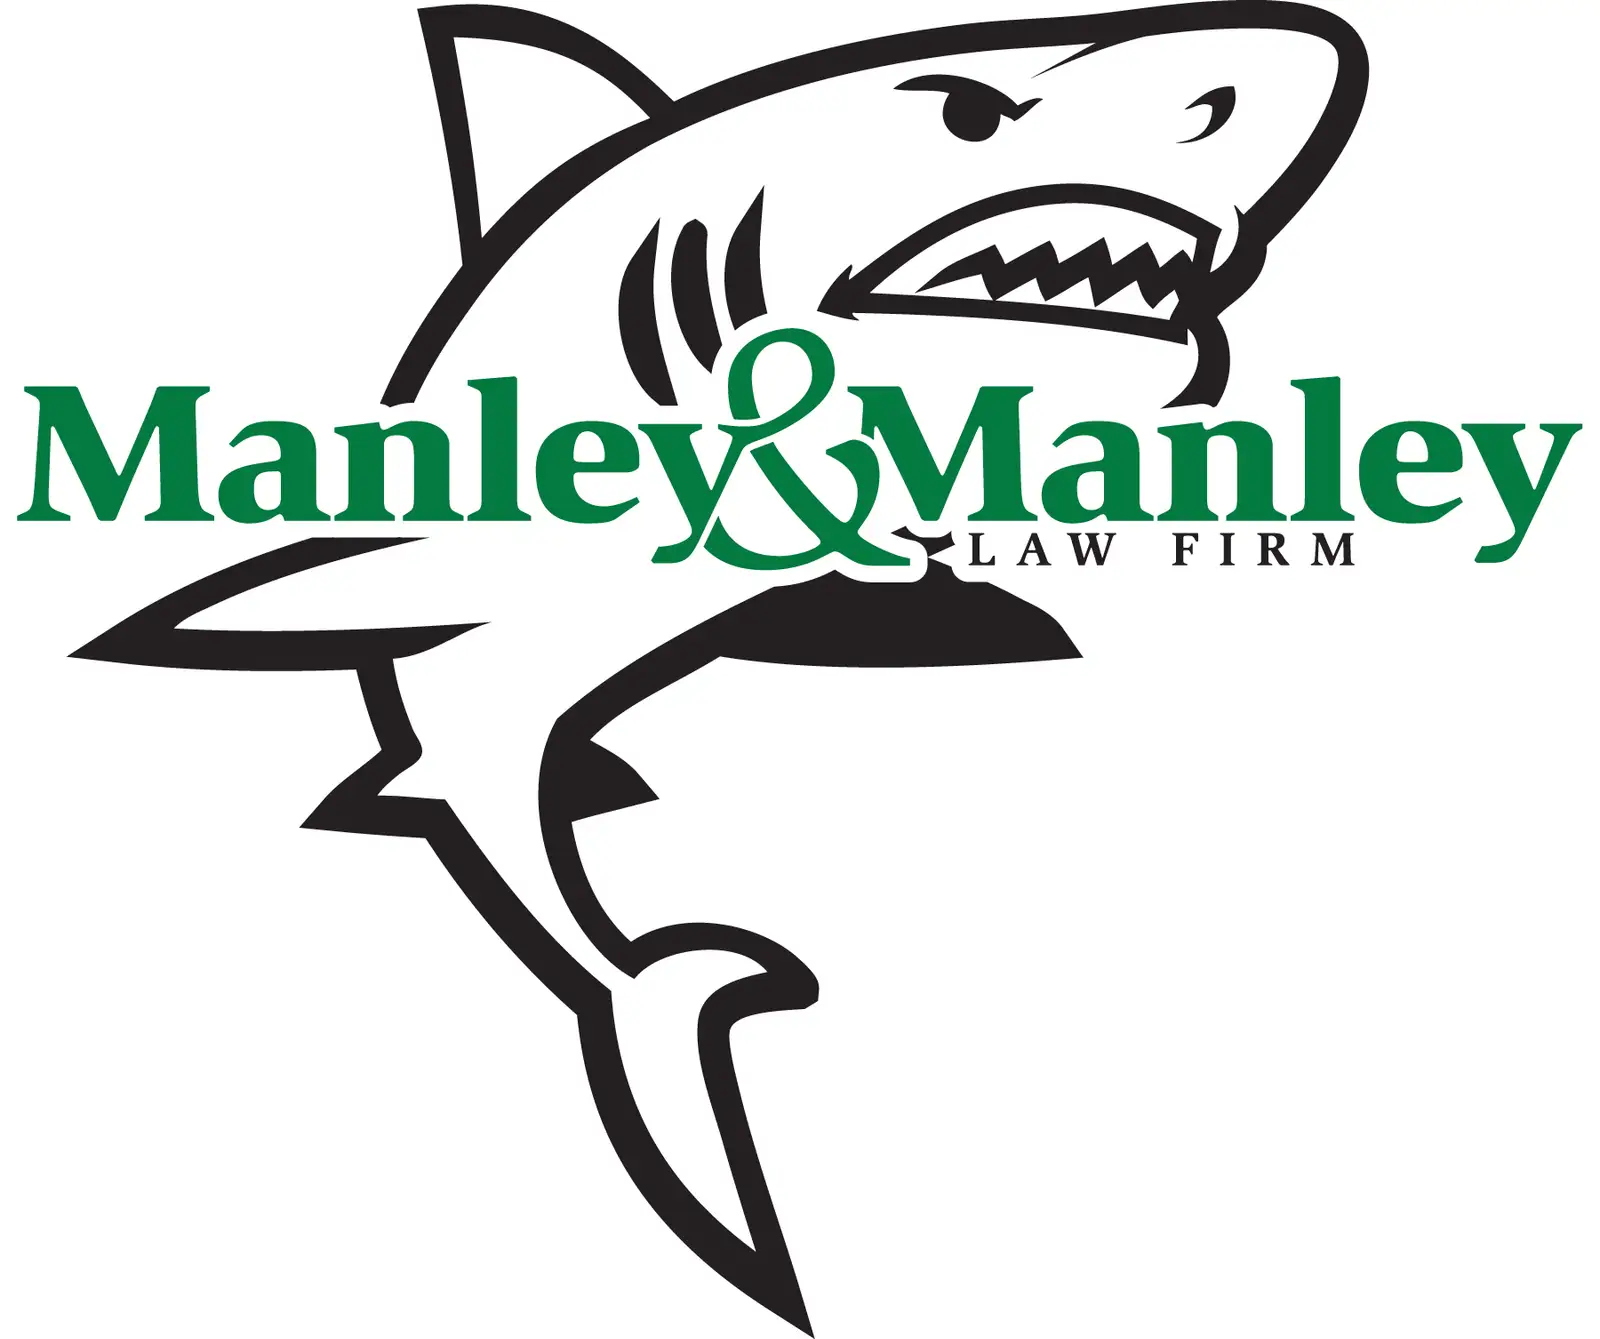 Manley & Manley Law Firm logo